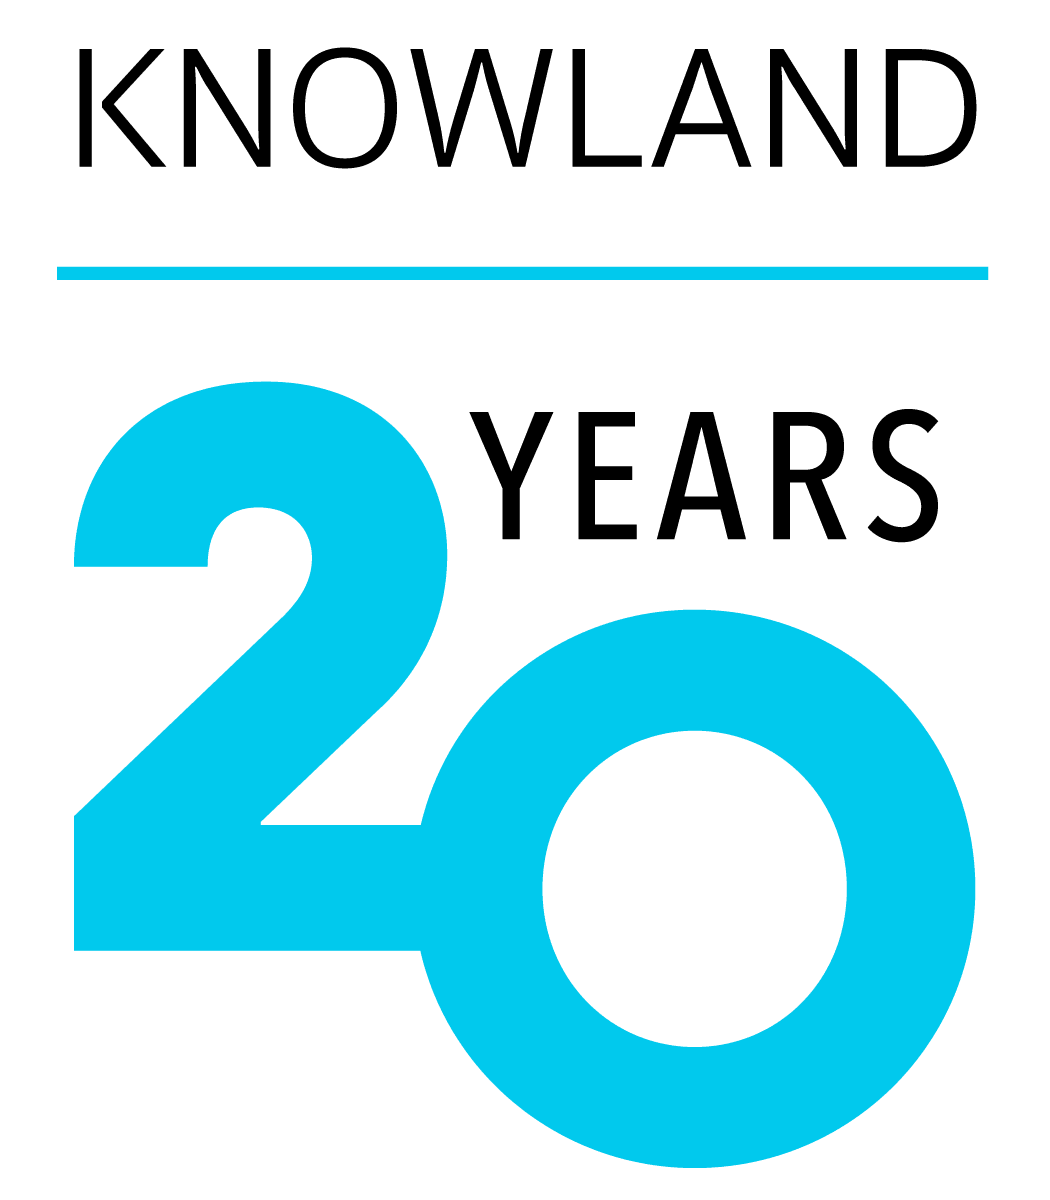 Knowland 20 Years logo